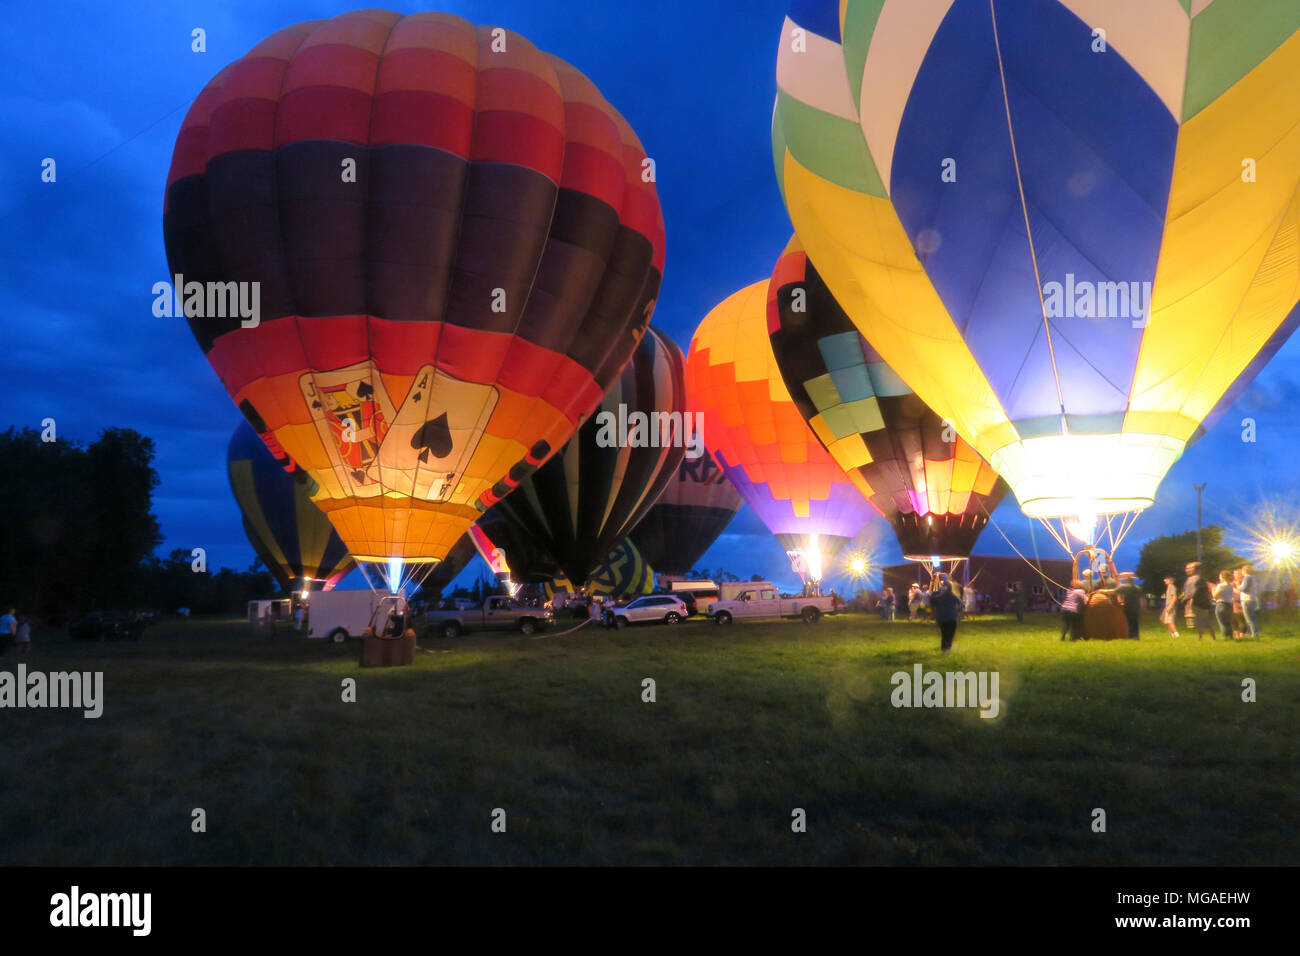 Hot Air Balloon glow mit Flammen an einem Connecticut Balloon Festival Abend ballon Glühen Stockfoto